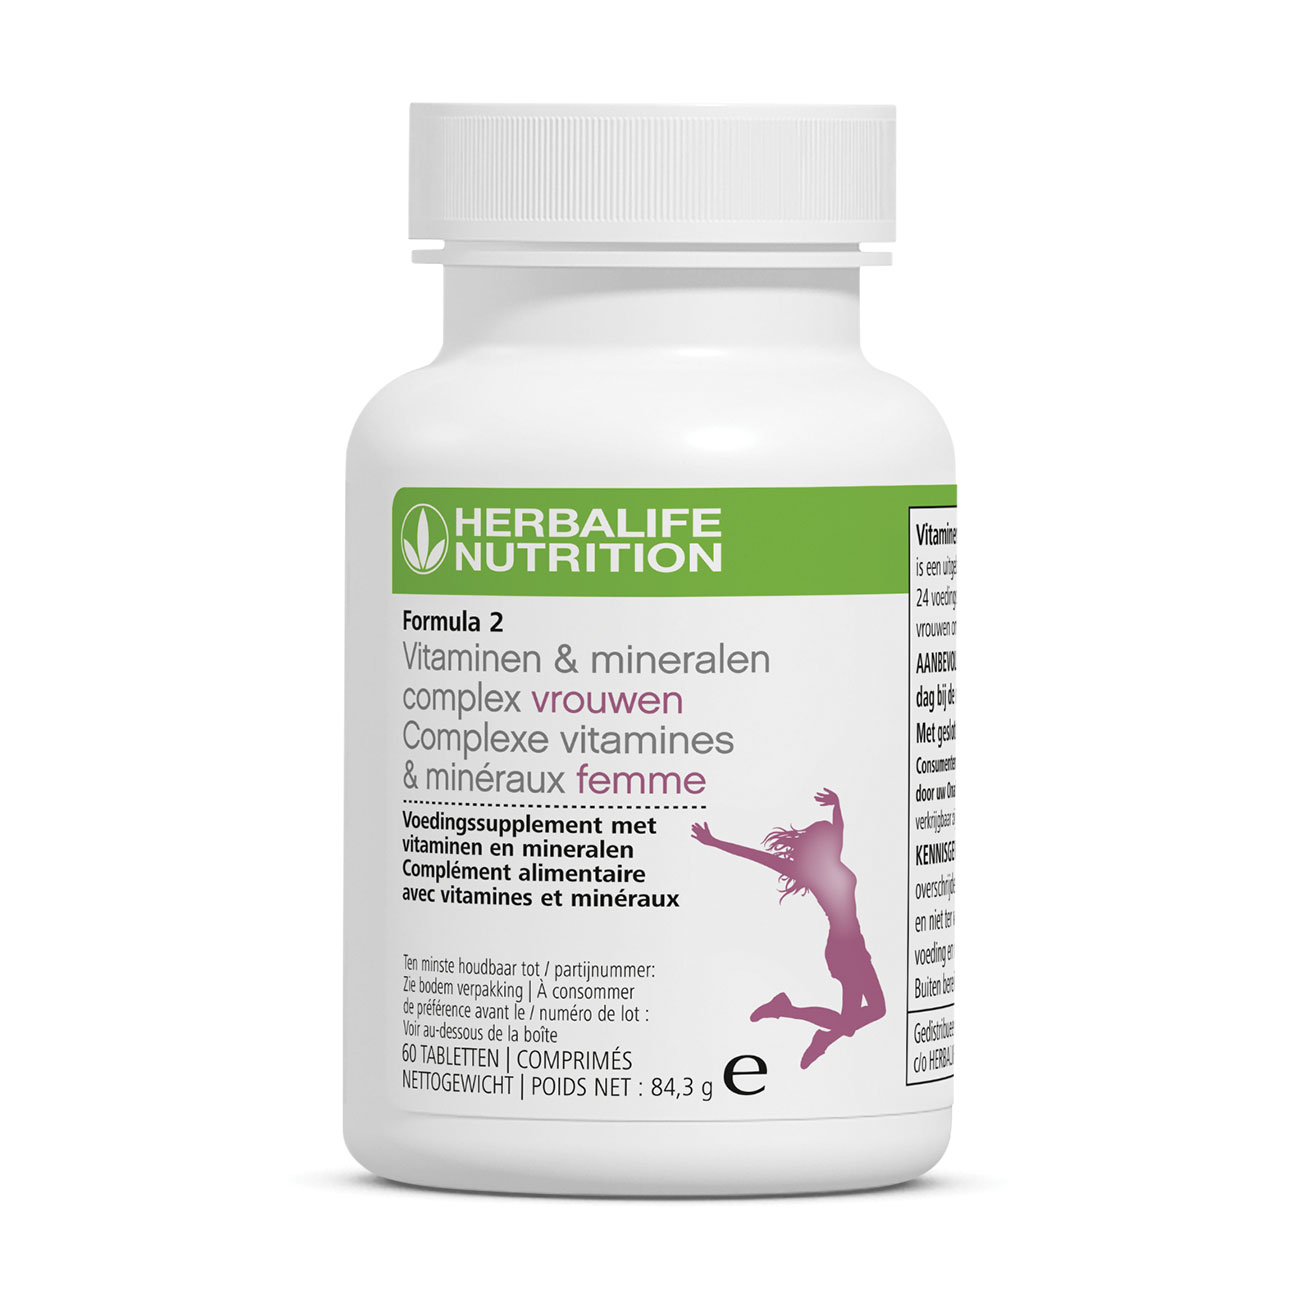 Formula 2 - Complexe vitamines & minéraux femme  product shot